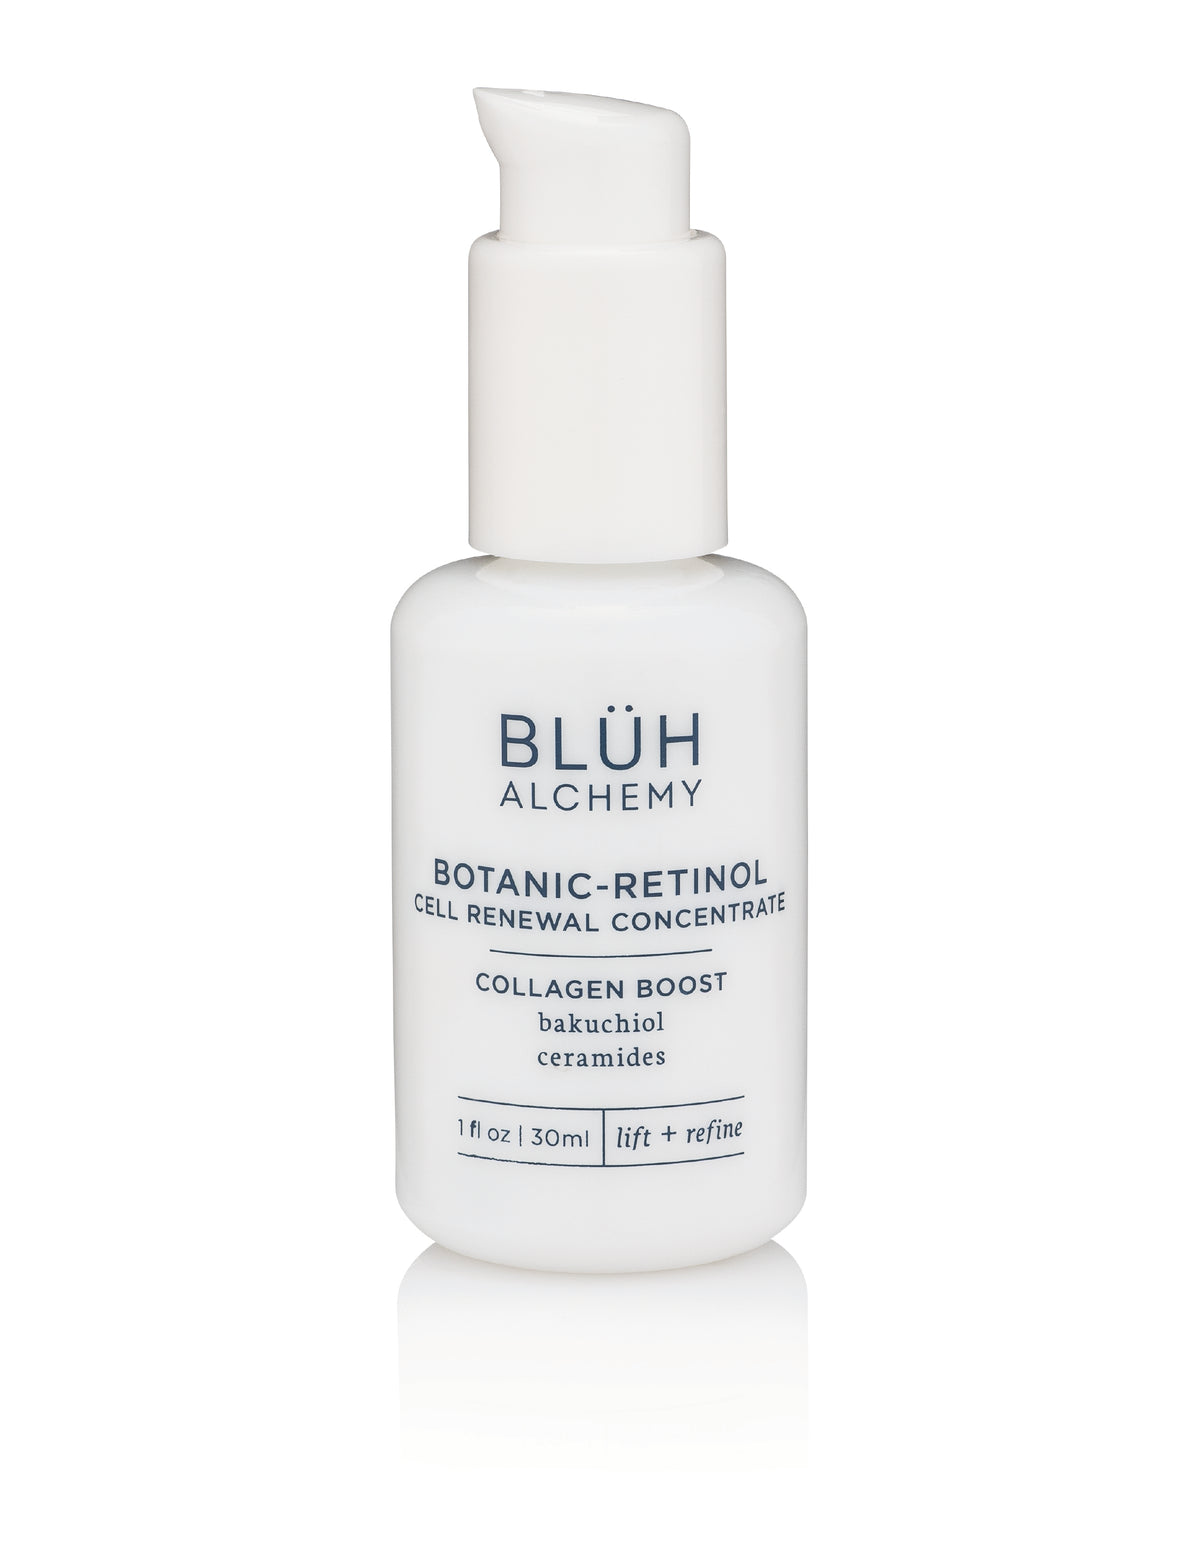 Bluh Alchemy Botanic-Retinol Cell Renewal Concentrate